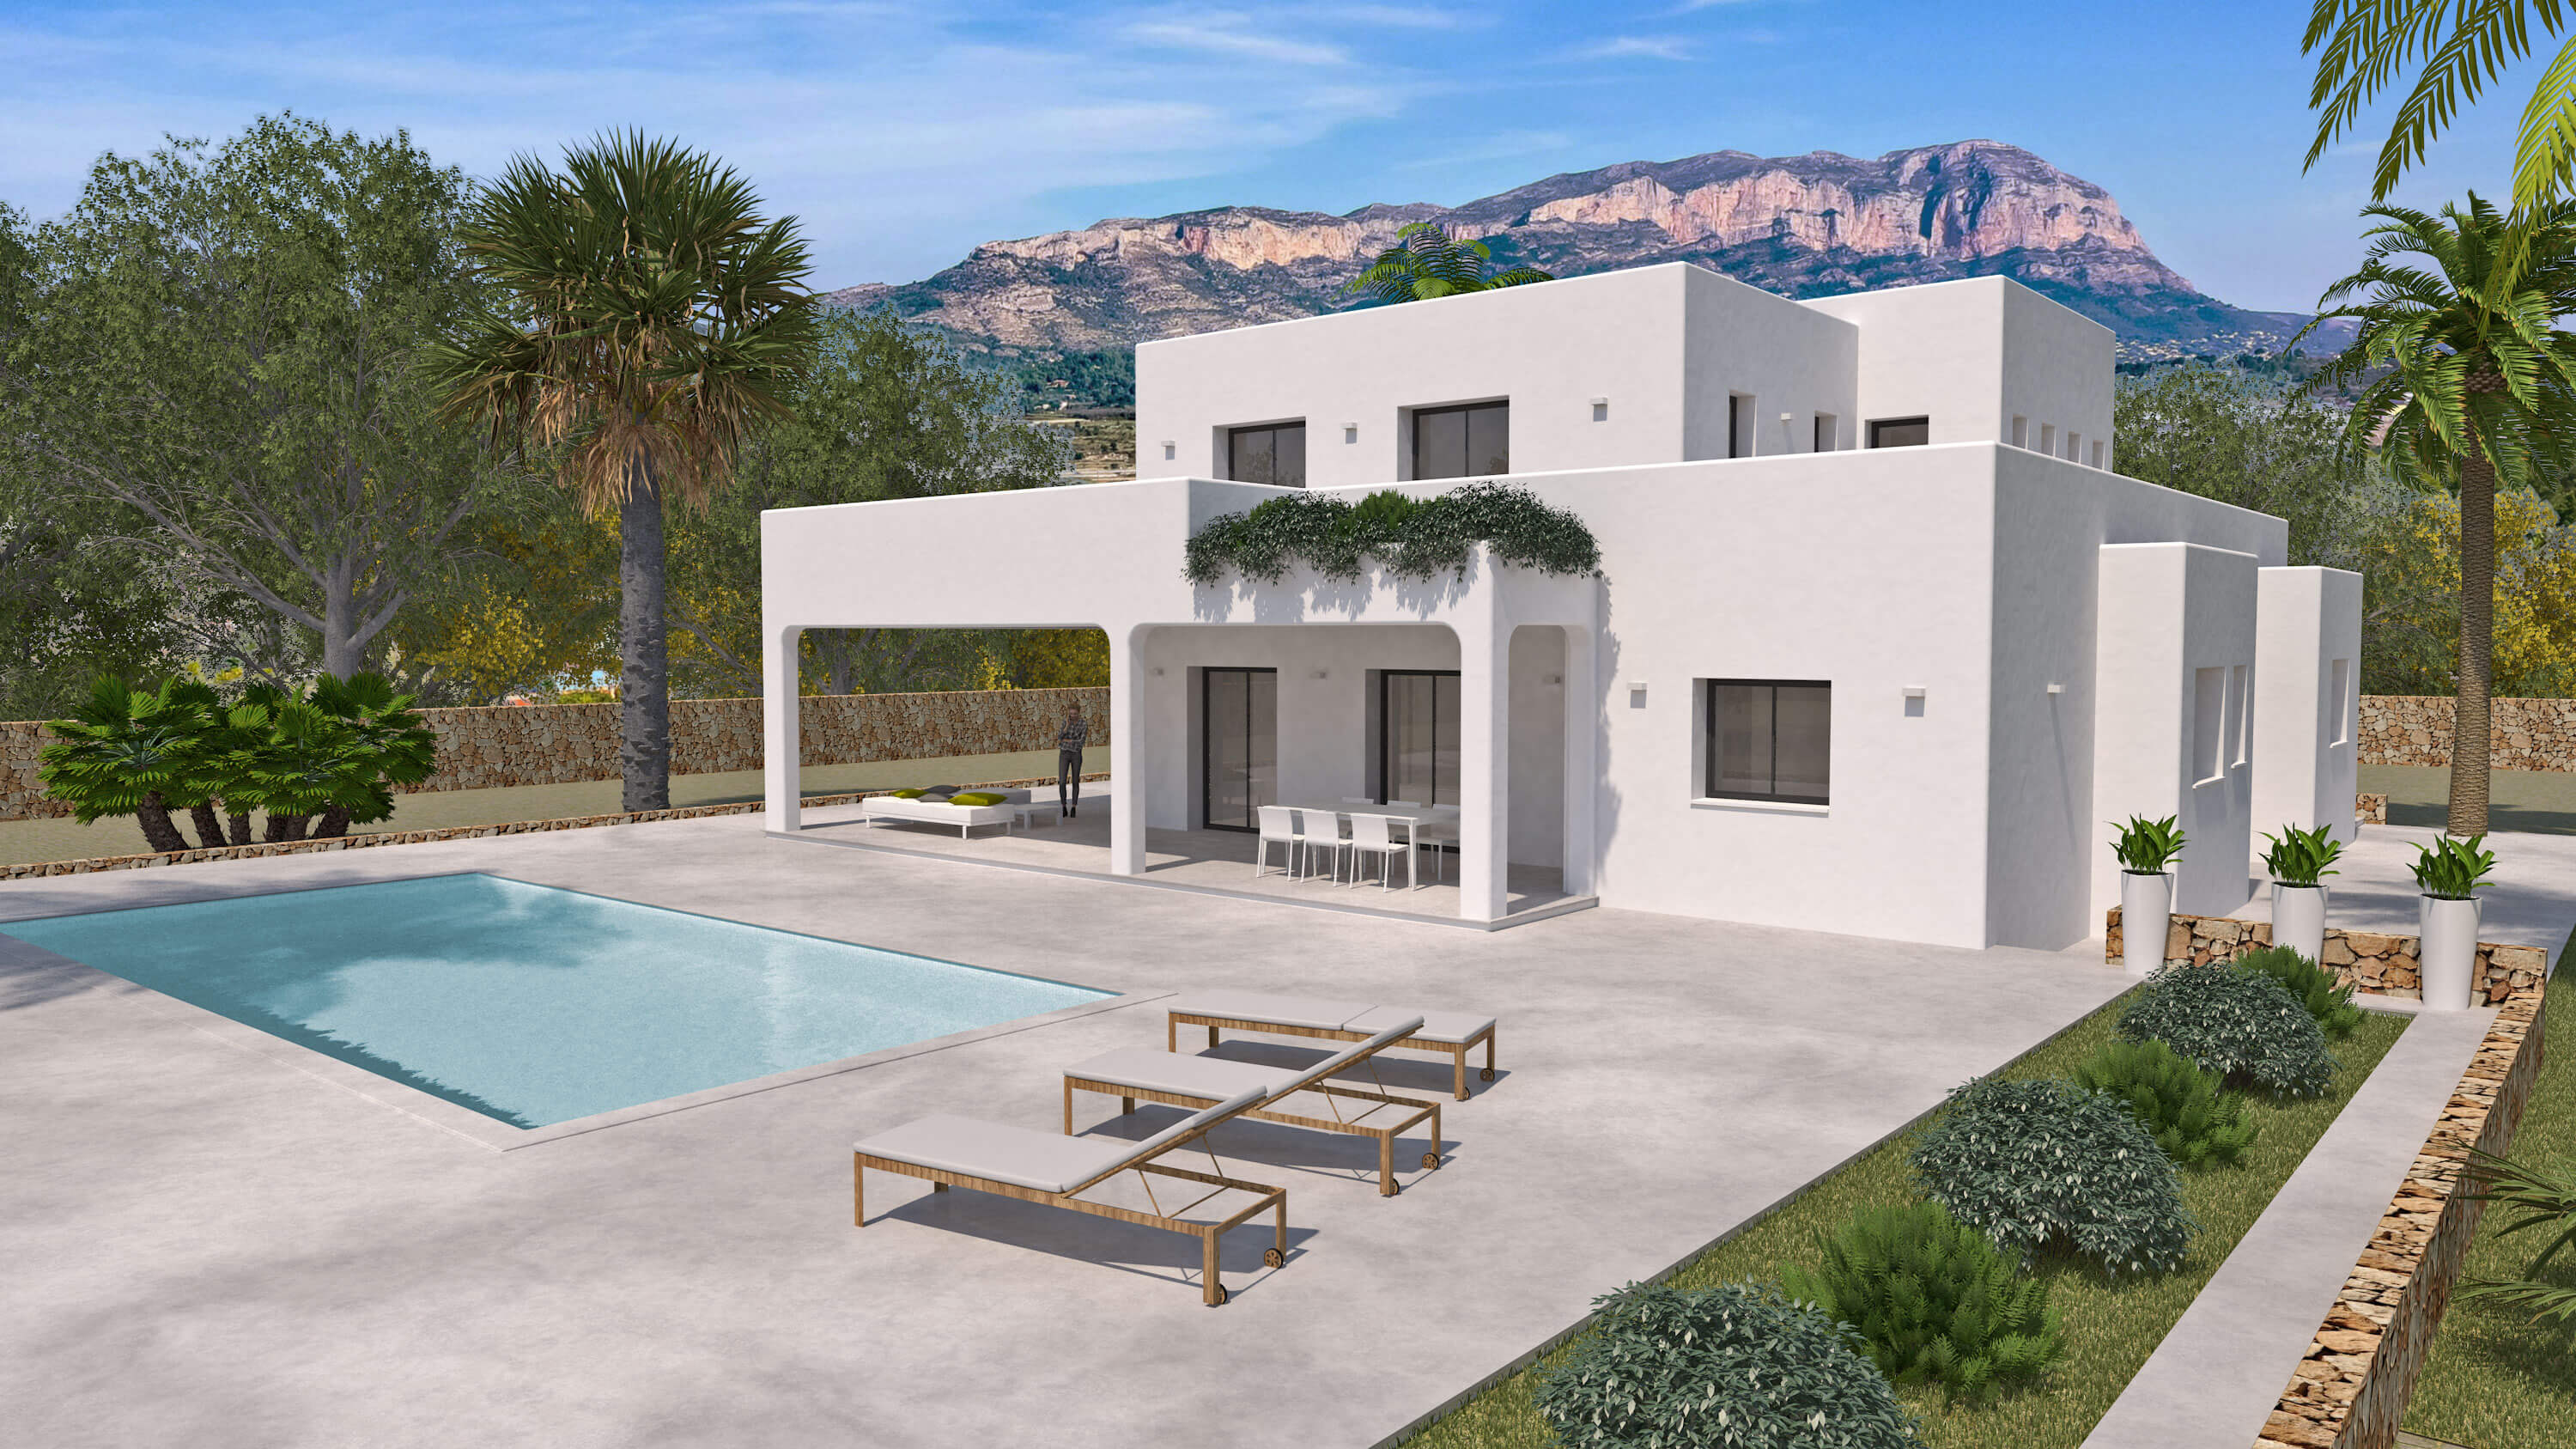 Prachtige Ibiza stijl villa op 10.000m2